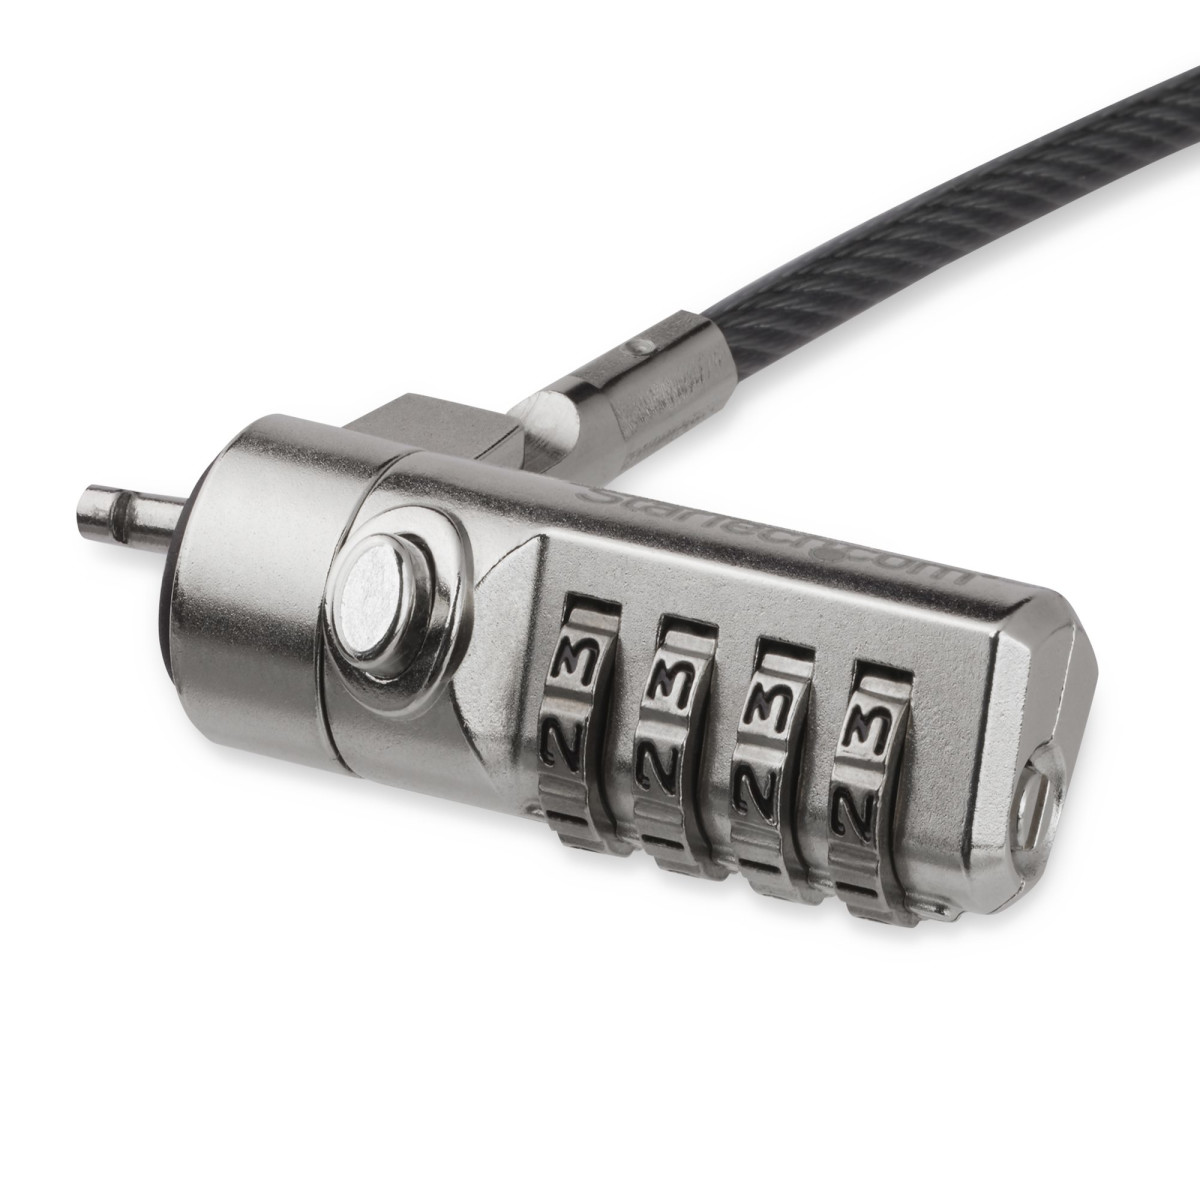 Cable Lock 4-Digit Combination Lock